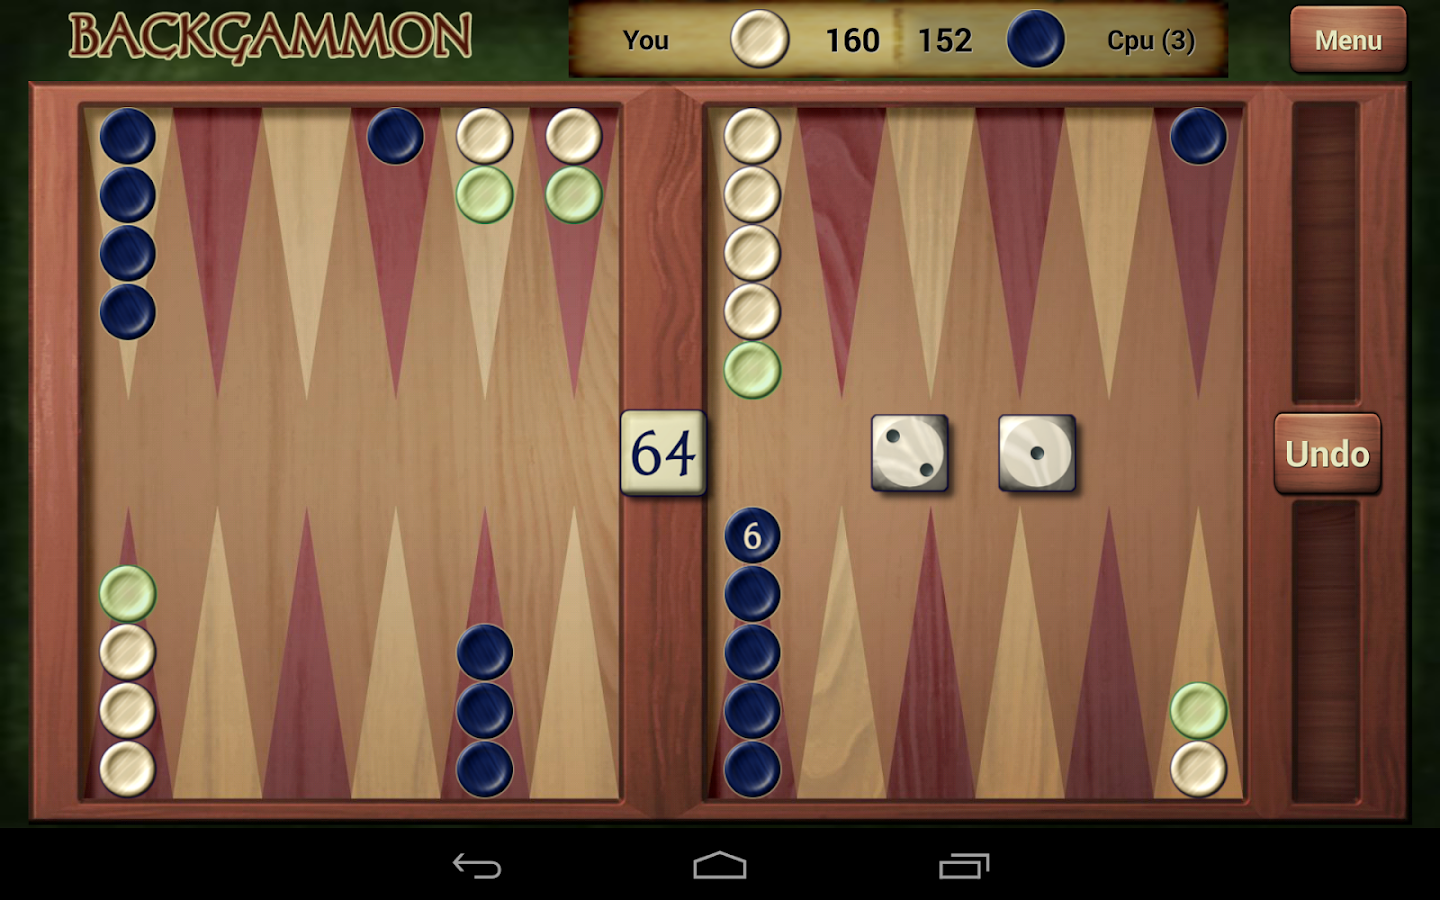 Backgammon Online Free No Download